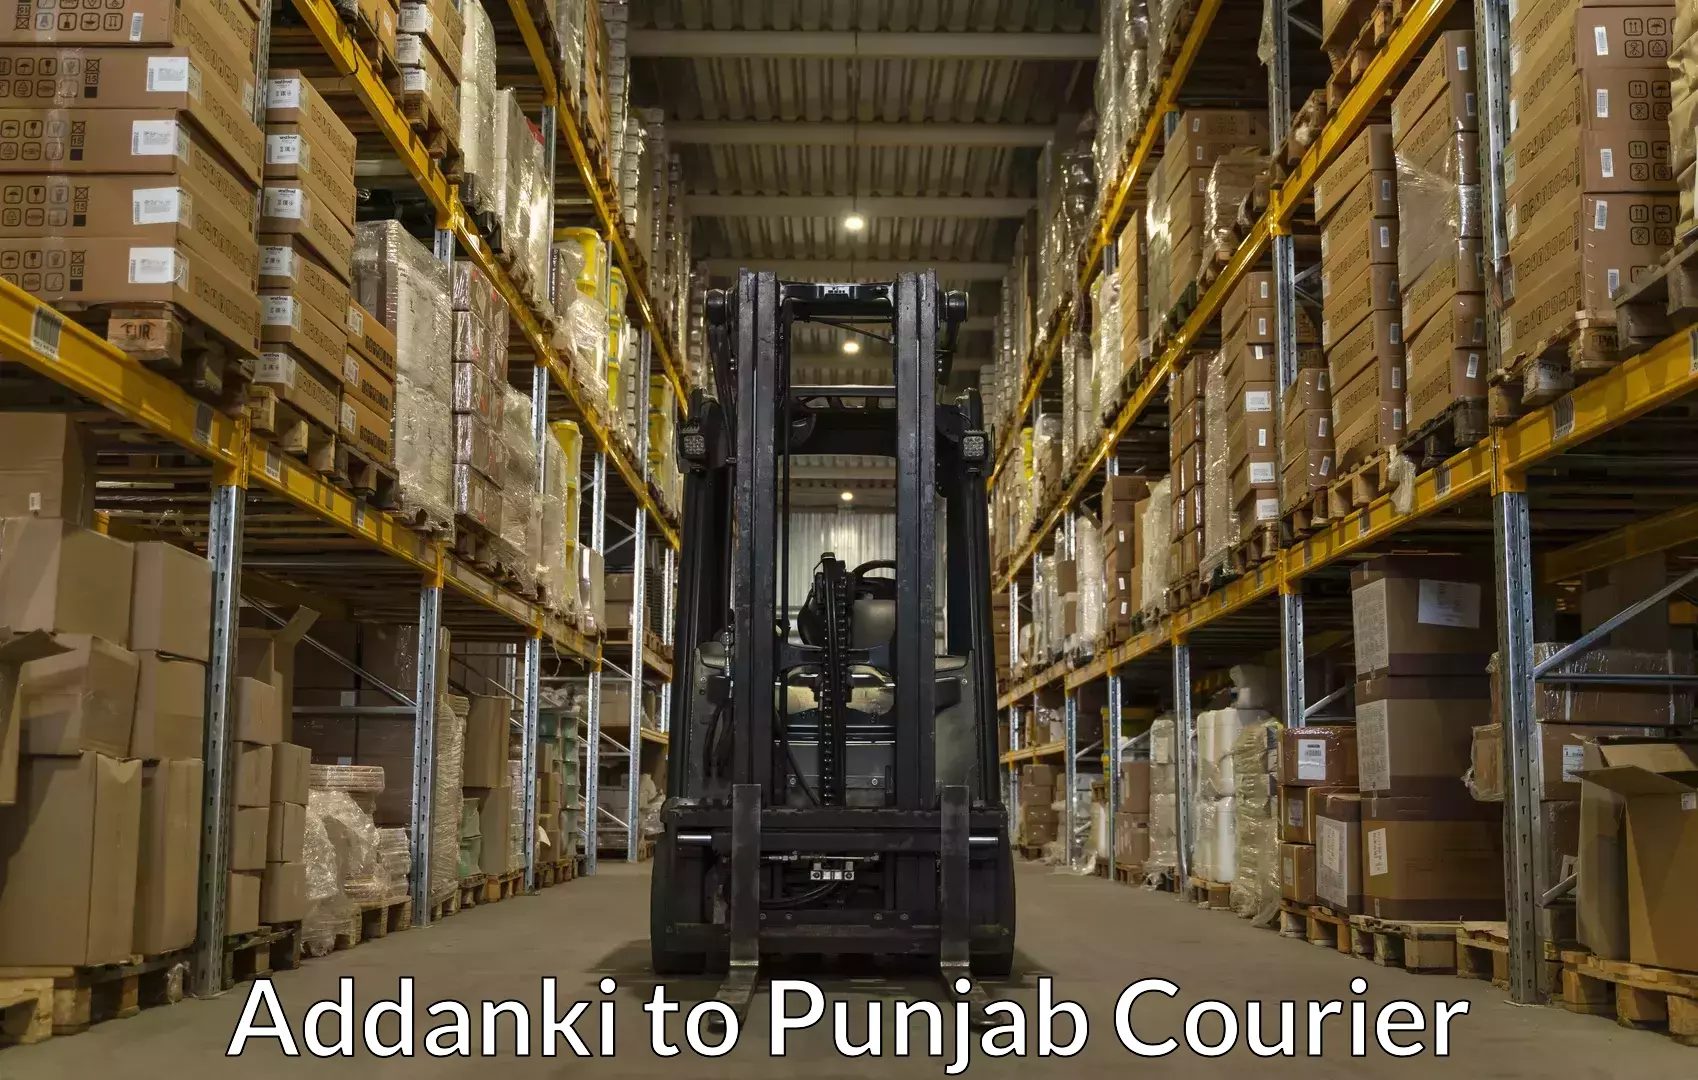 Trusted moving company Addanki to Punjab